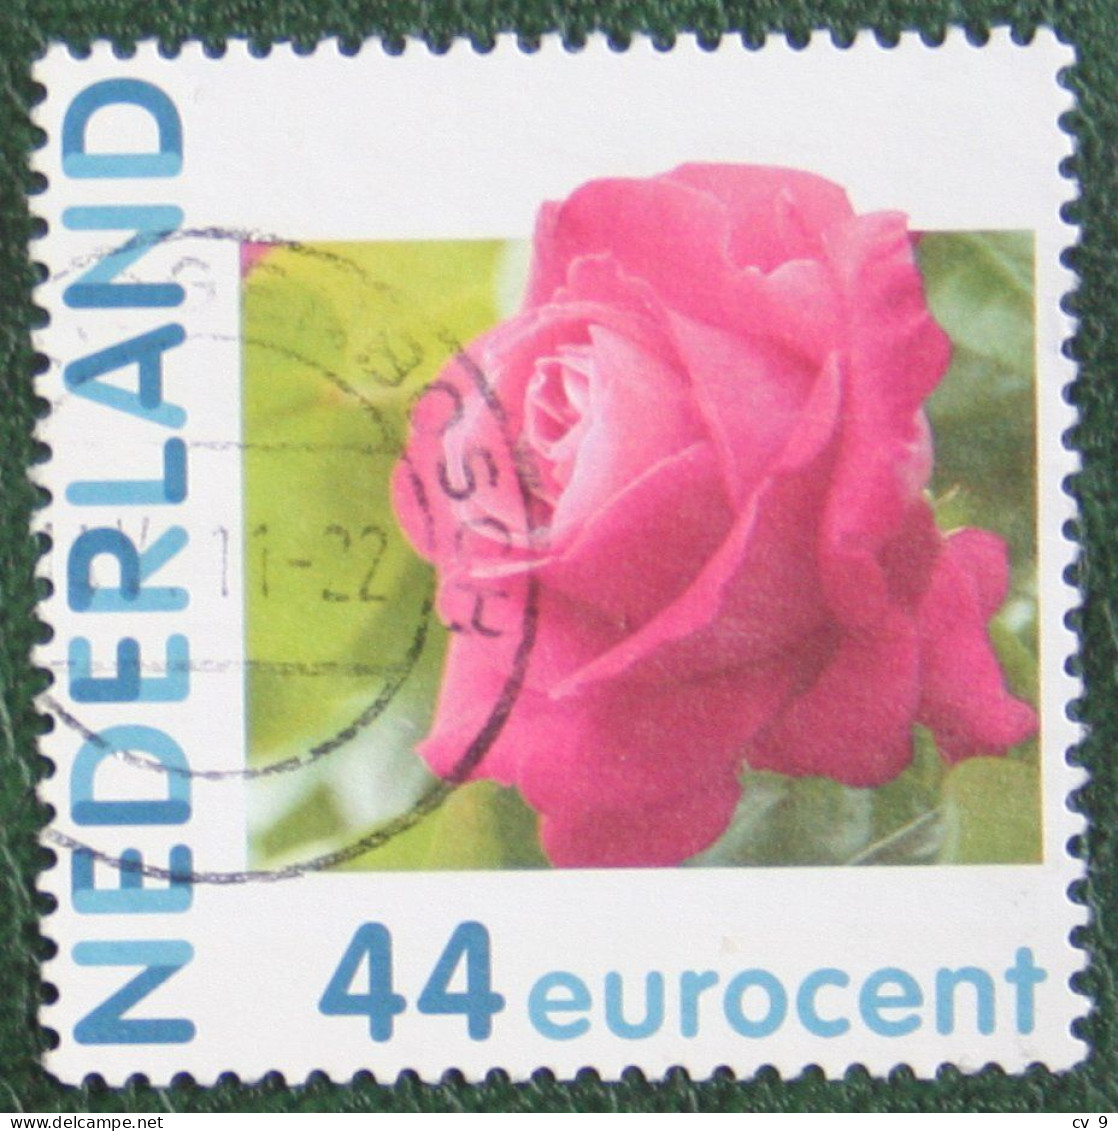 HALLMARK Rose Roos Flower Fleur Blumen Persoonlijke Zegel NVPH 2682 Gestempeld / USED / Oblitere NEDERLAND / NIEDERLANDE - Personalisierte Briefmarken